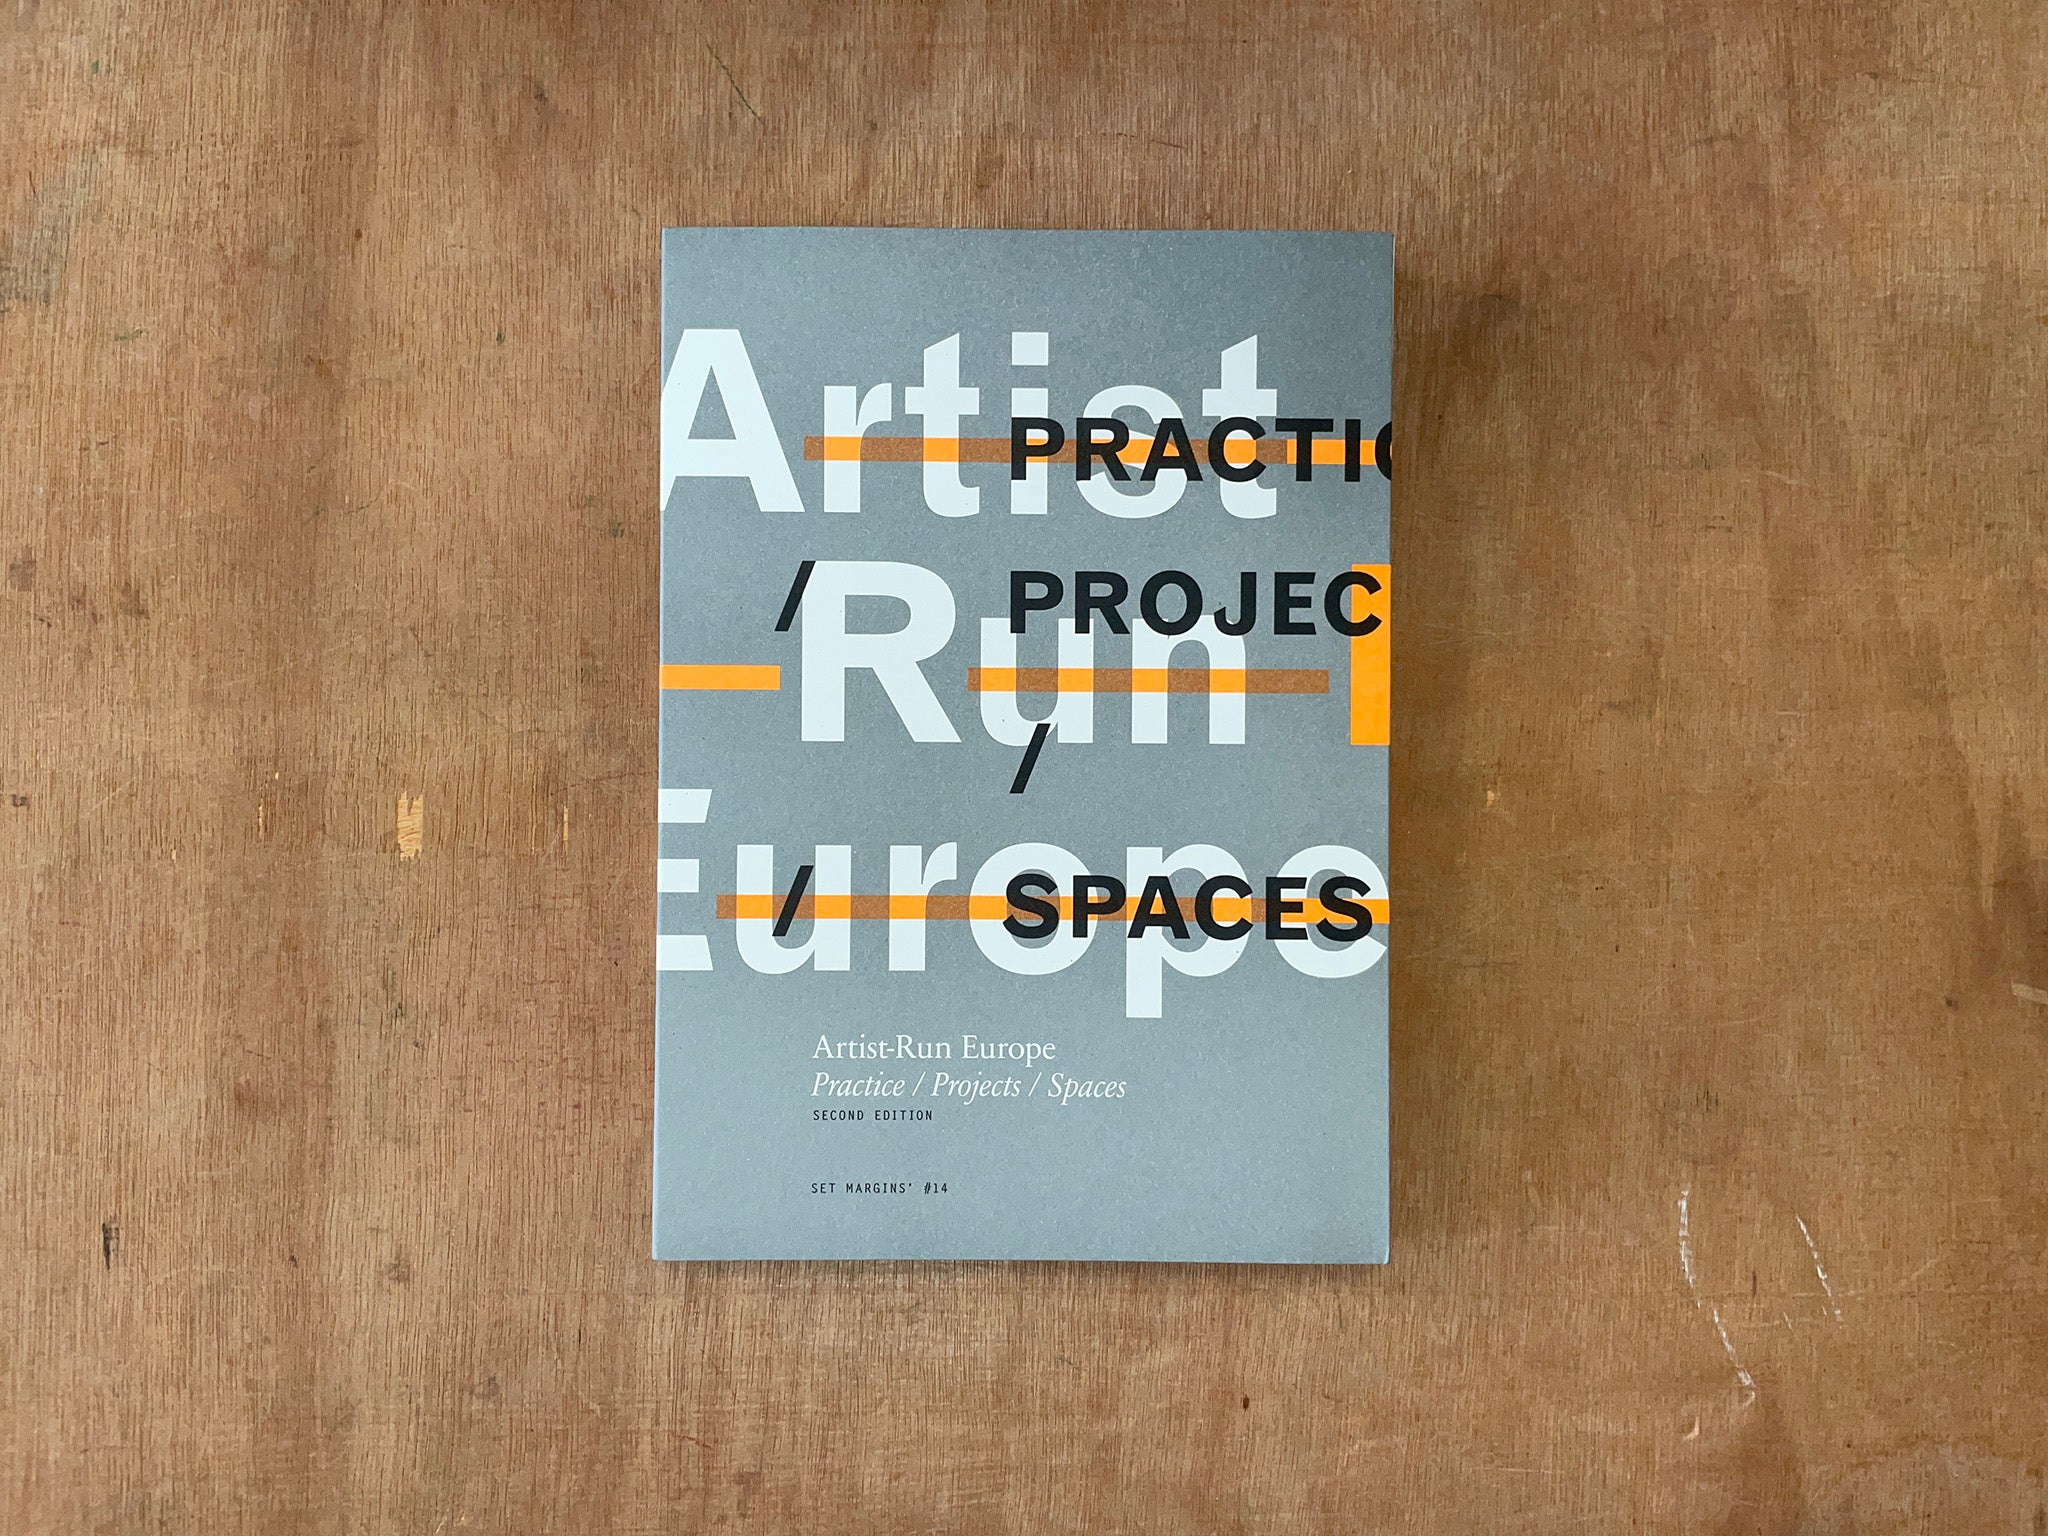 ARTIST-RUN EUROPE – PRACTICE/PROJECTS/SPACES Ed. by Gavin Murphy & Mark Cullen